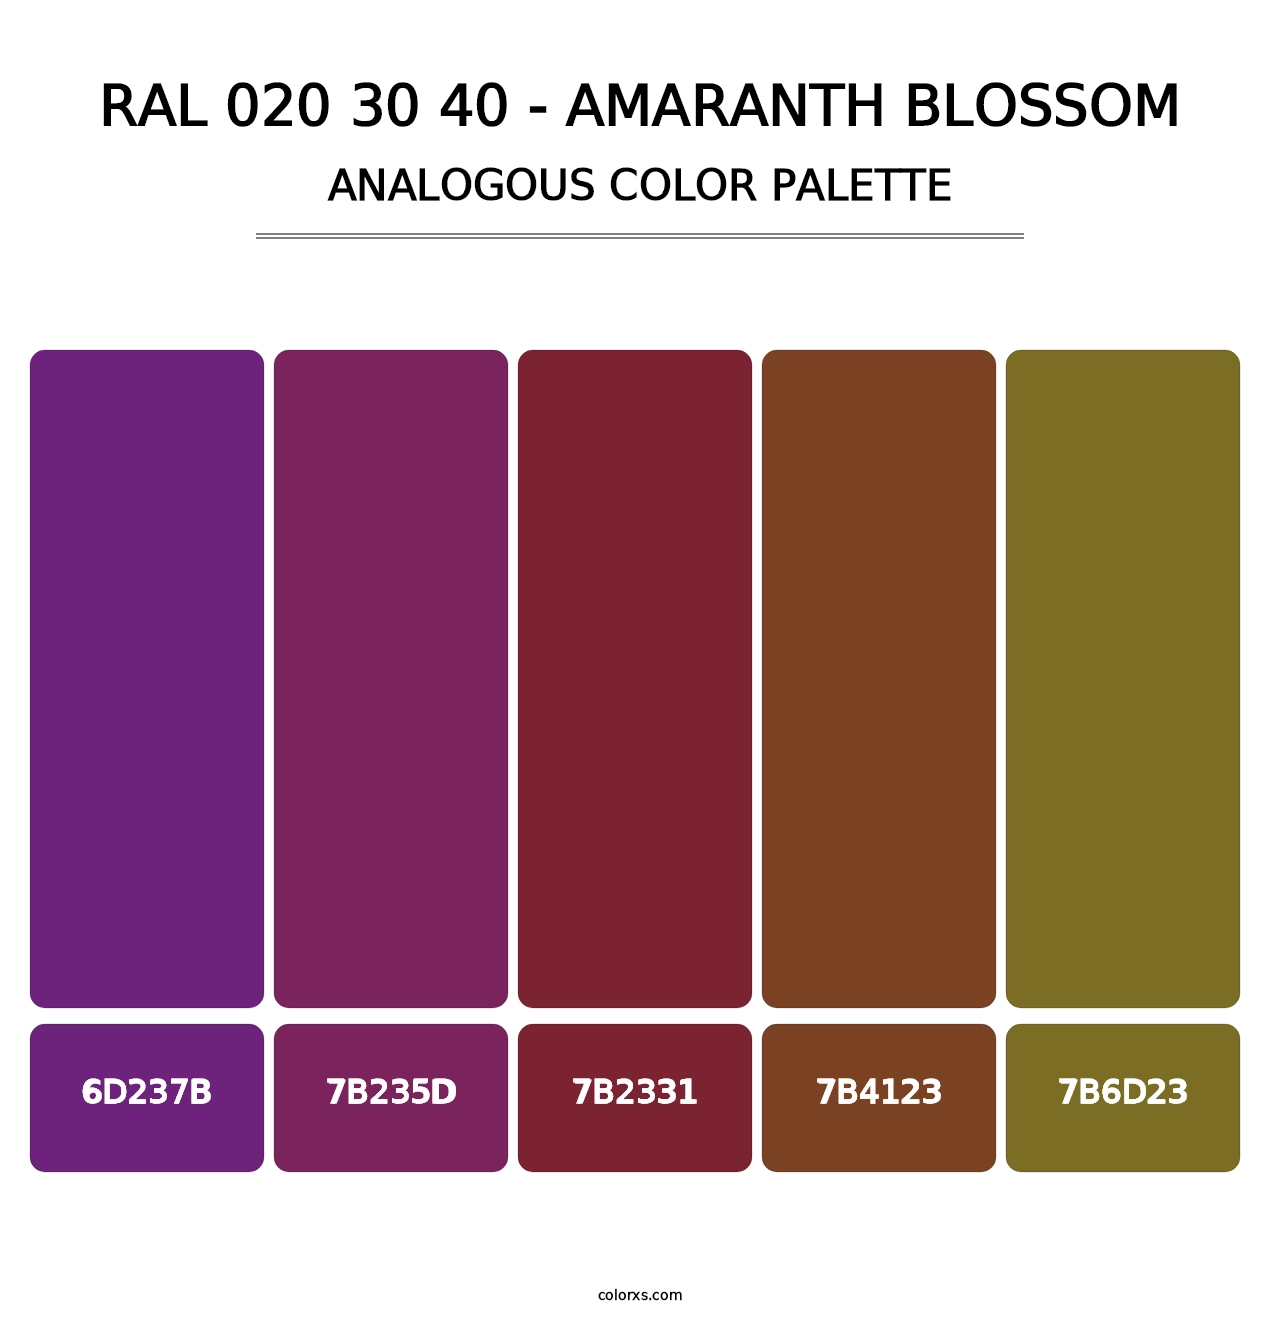 RAL 020 30 40 - Amaranth Blossom - Analogous Color Palette